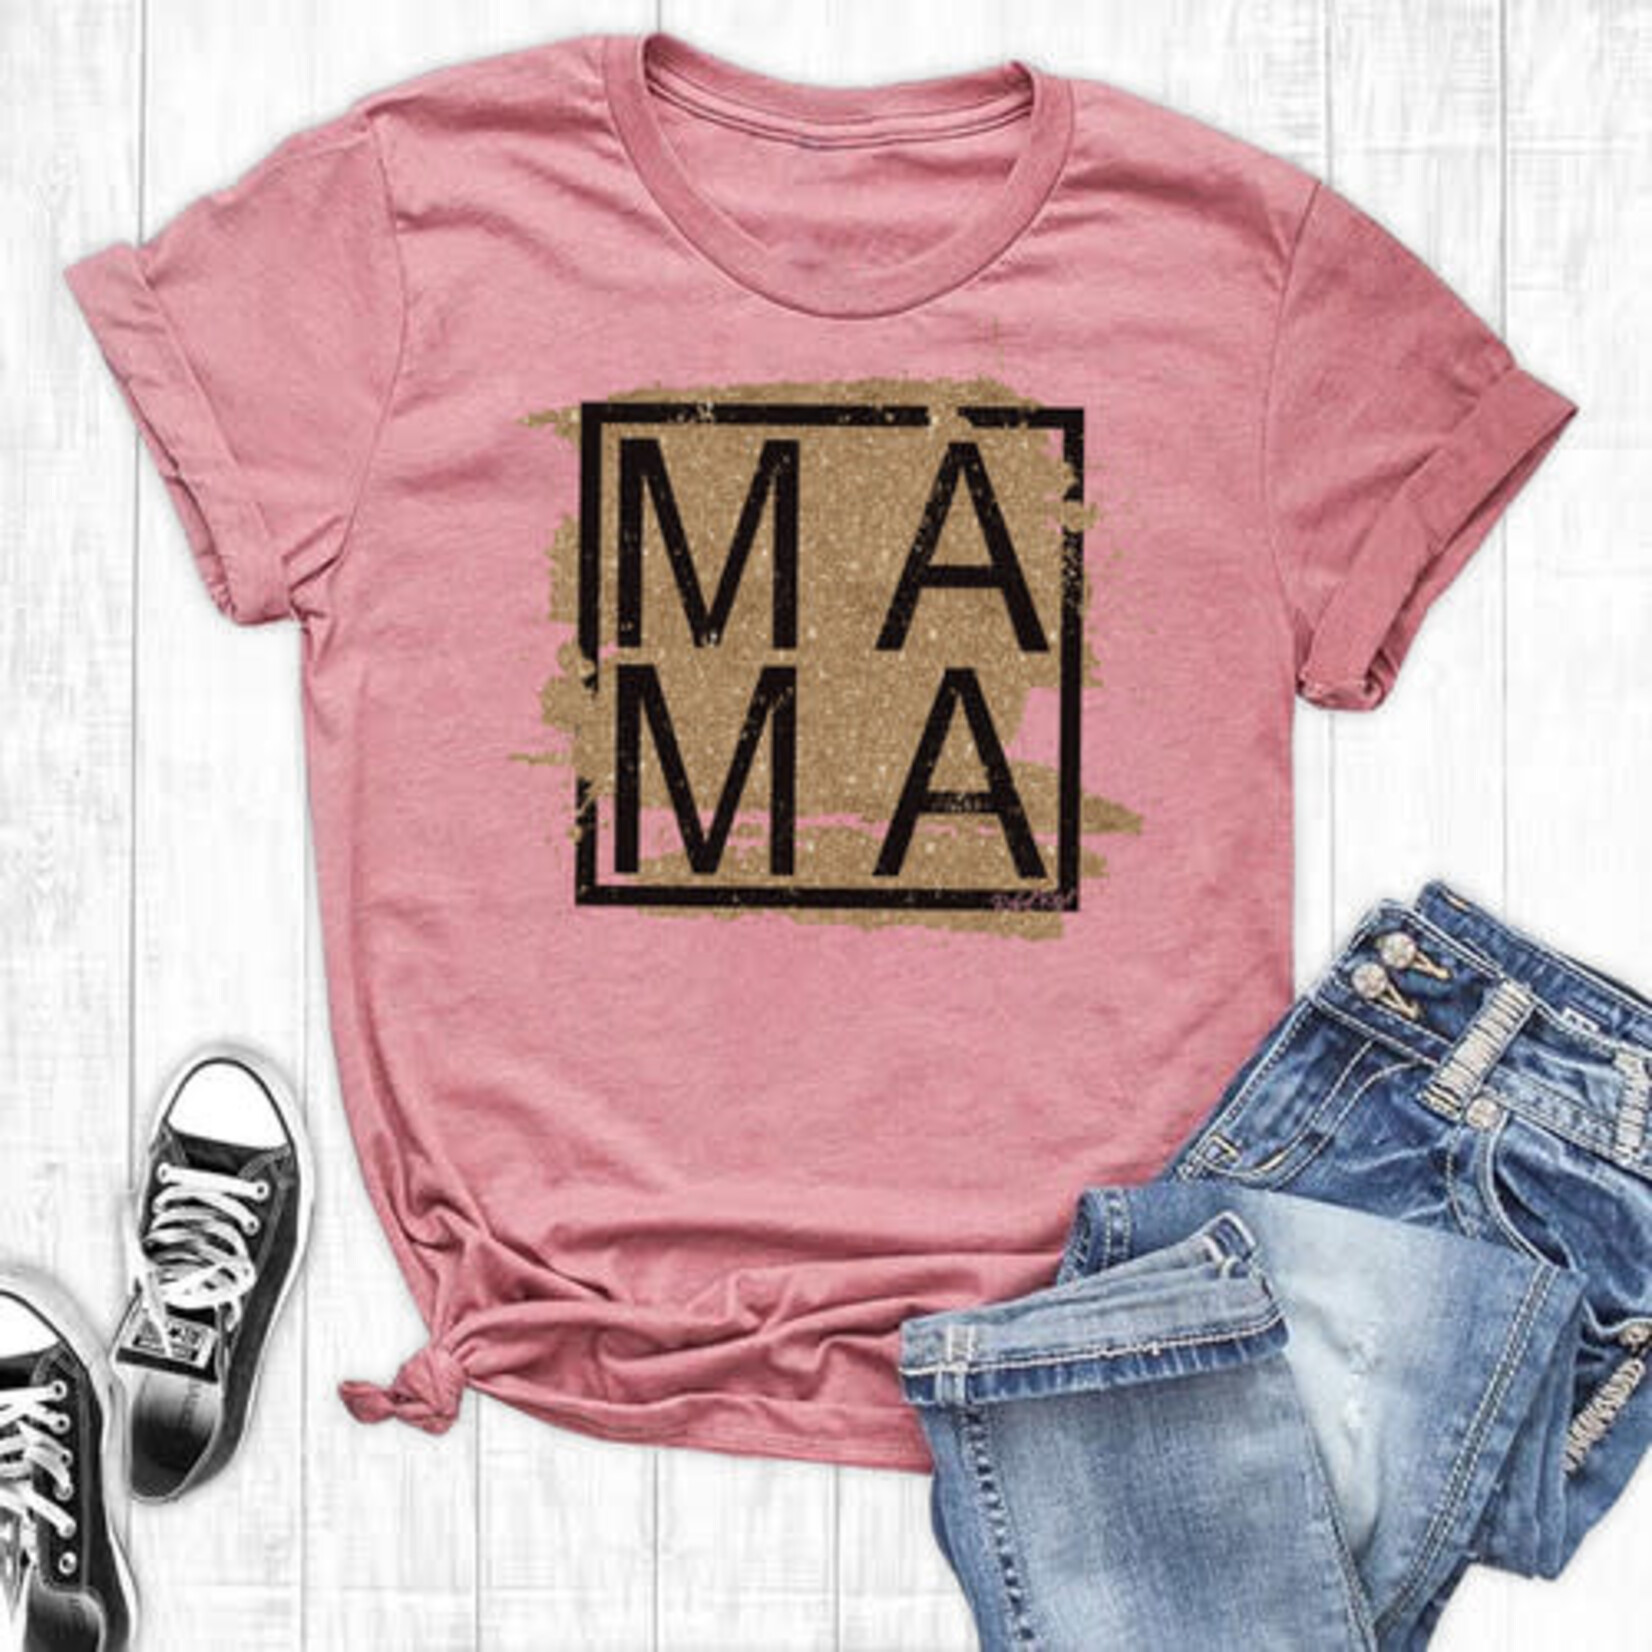 Rebel Rose Mama Graphic T-Shirt sz Small